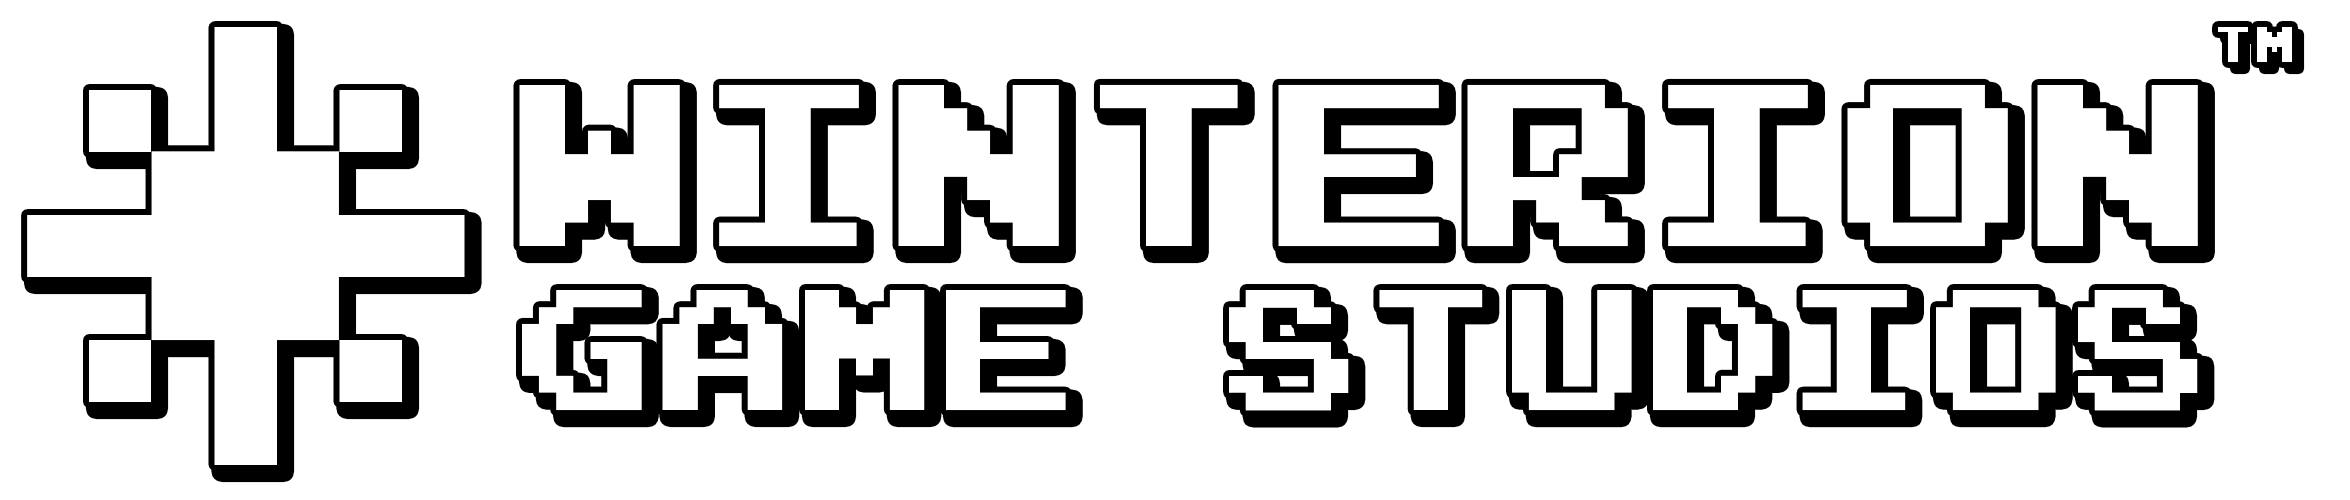 Winterion Game Studios logo